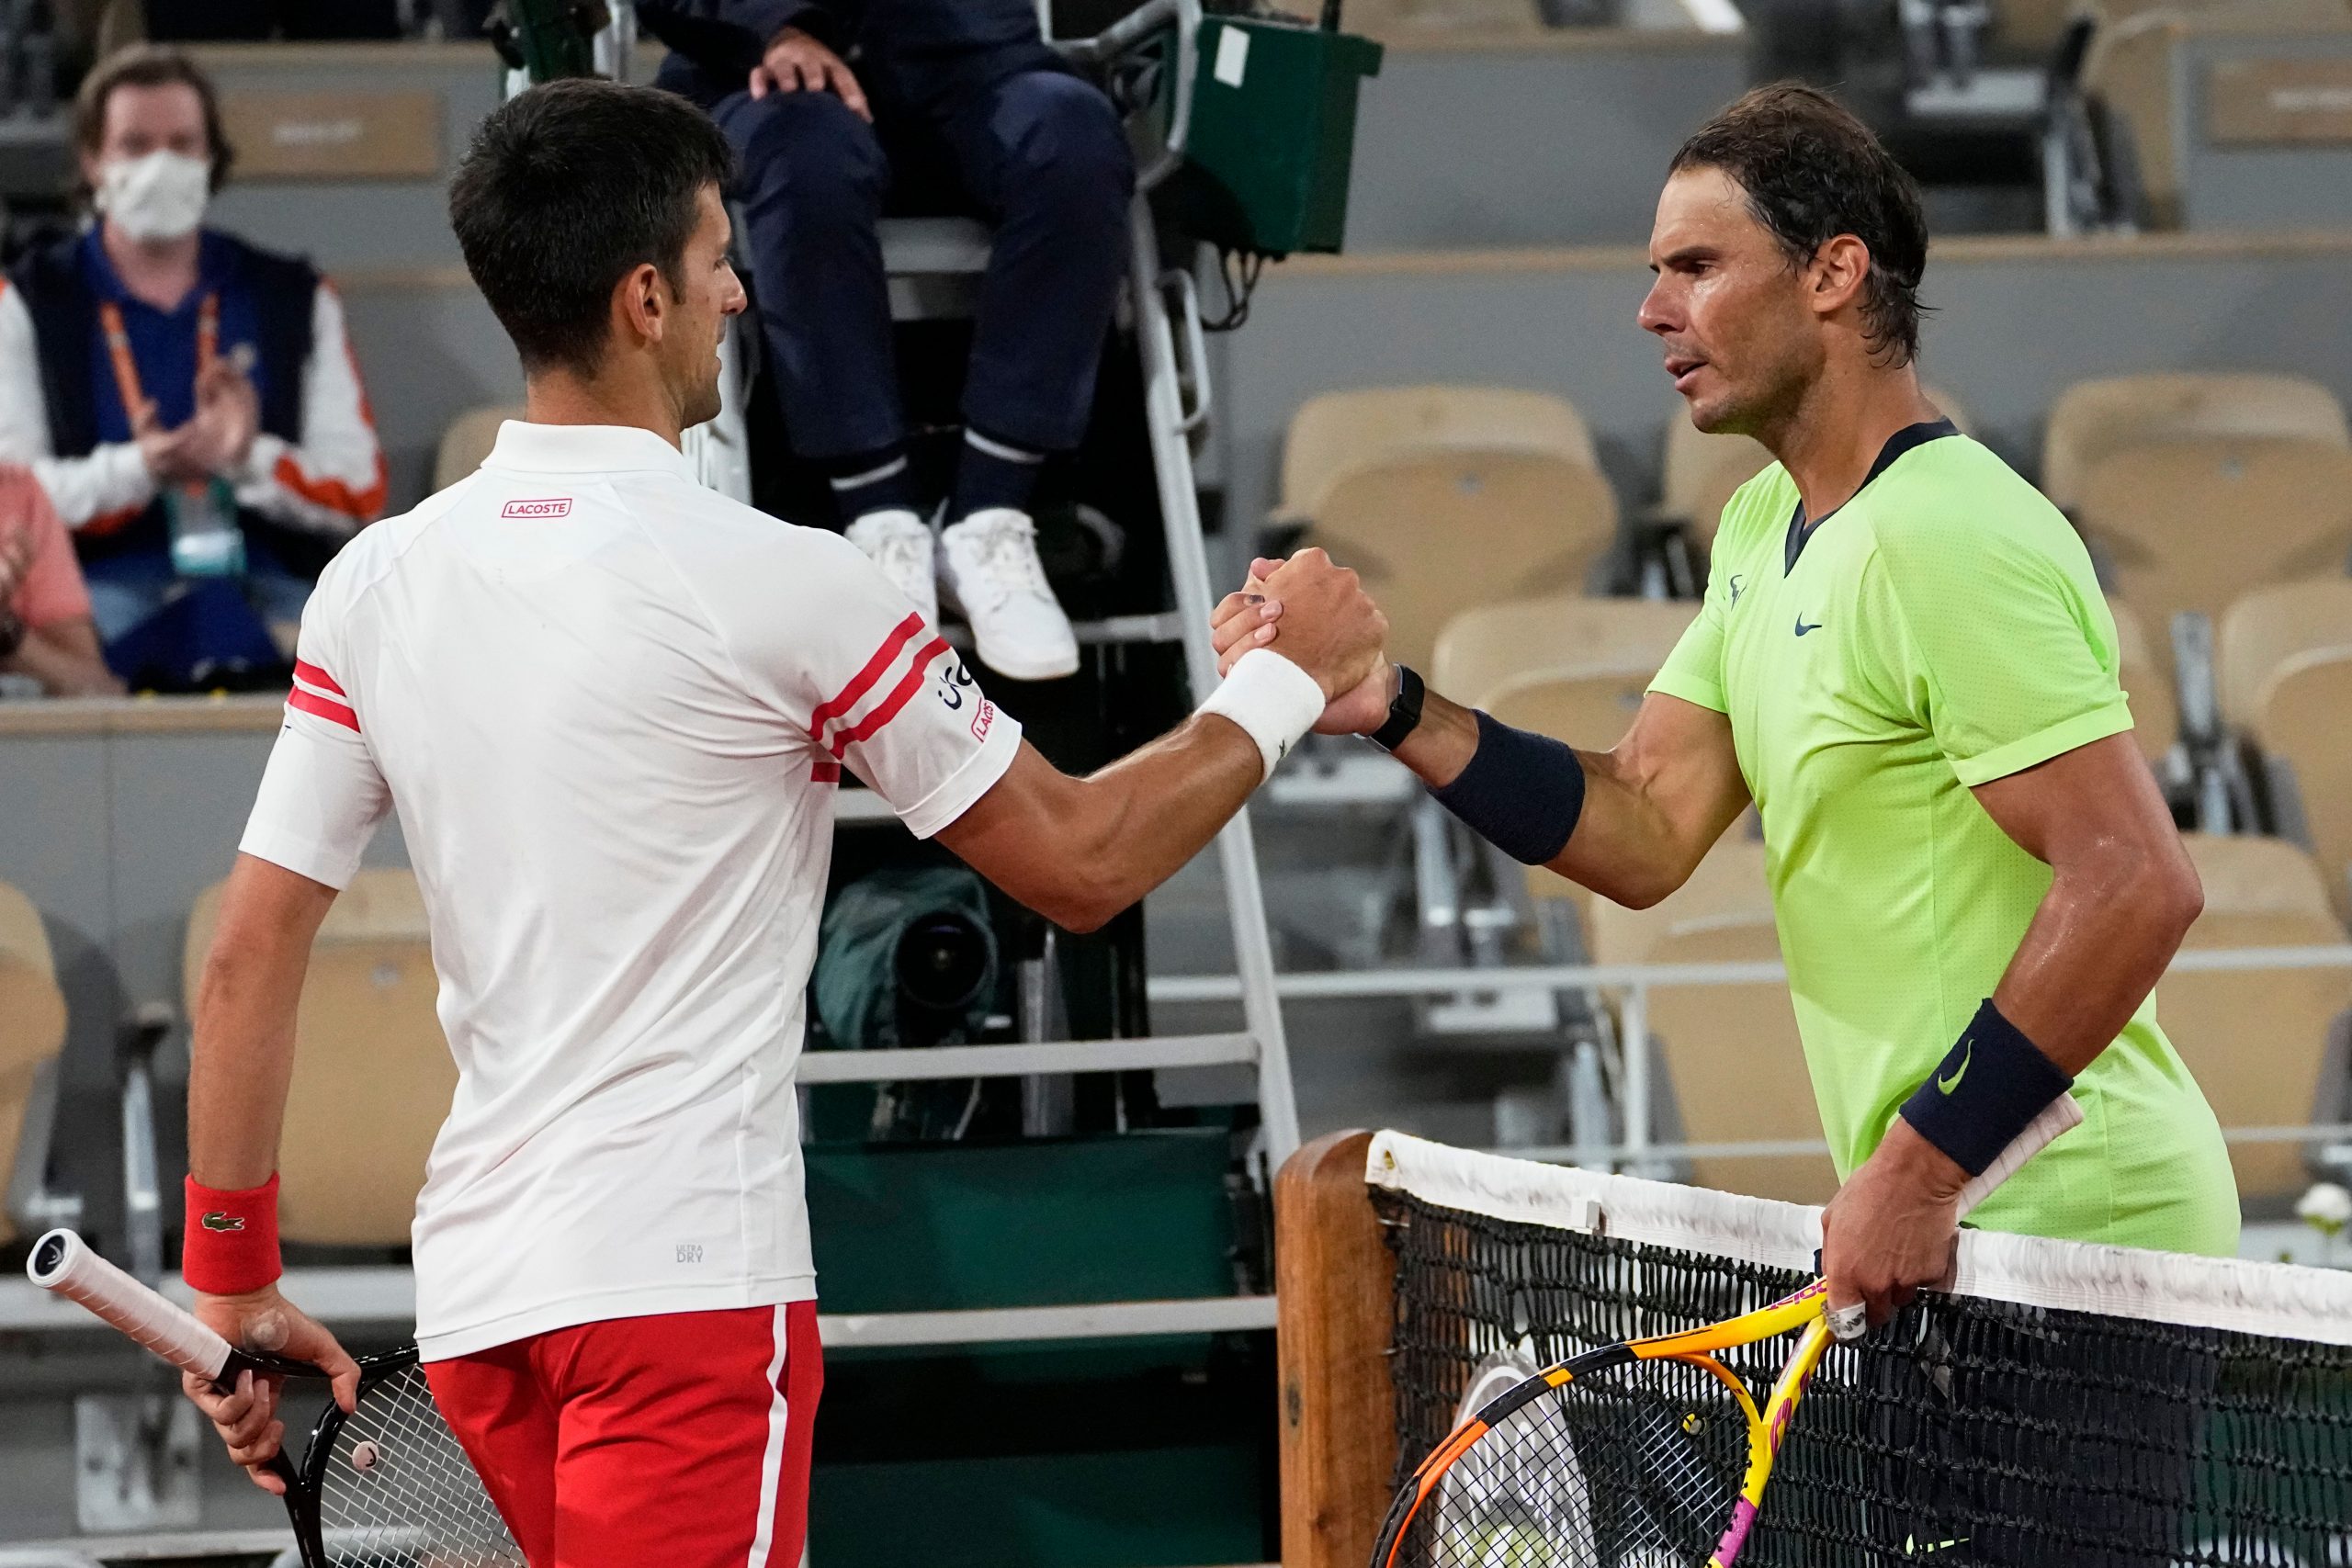 Rafael Nadal, Novak Djokovic ready for ‘physical battle’ at French Open 2022 quarters